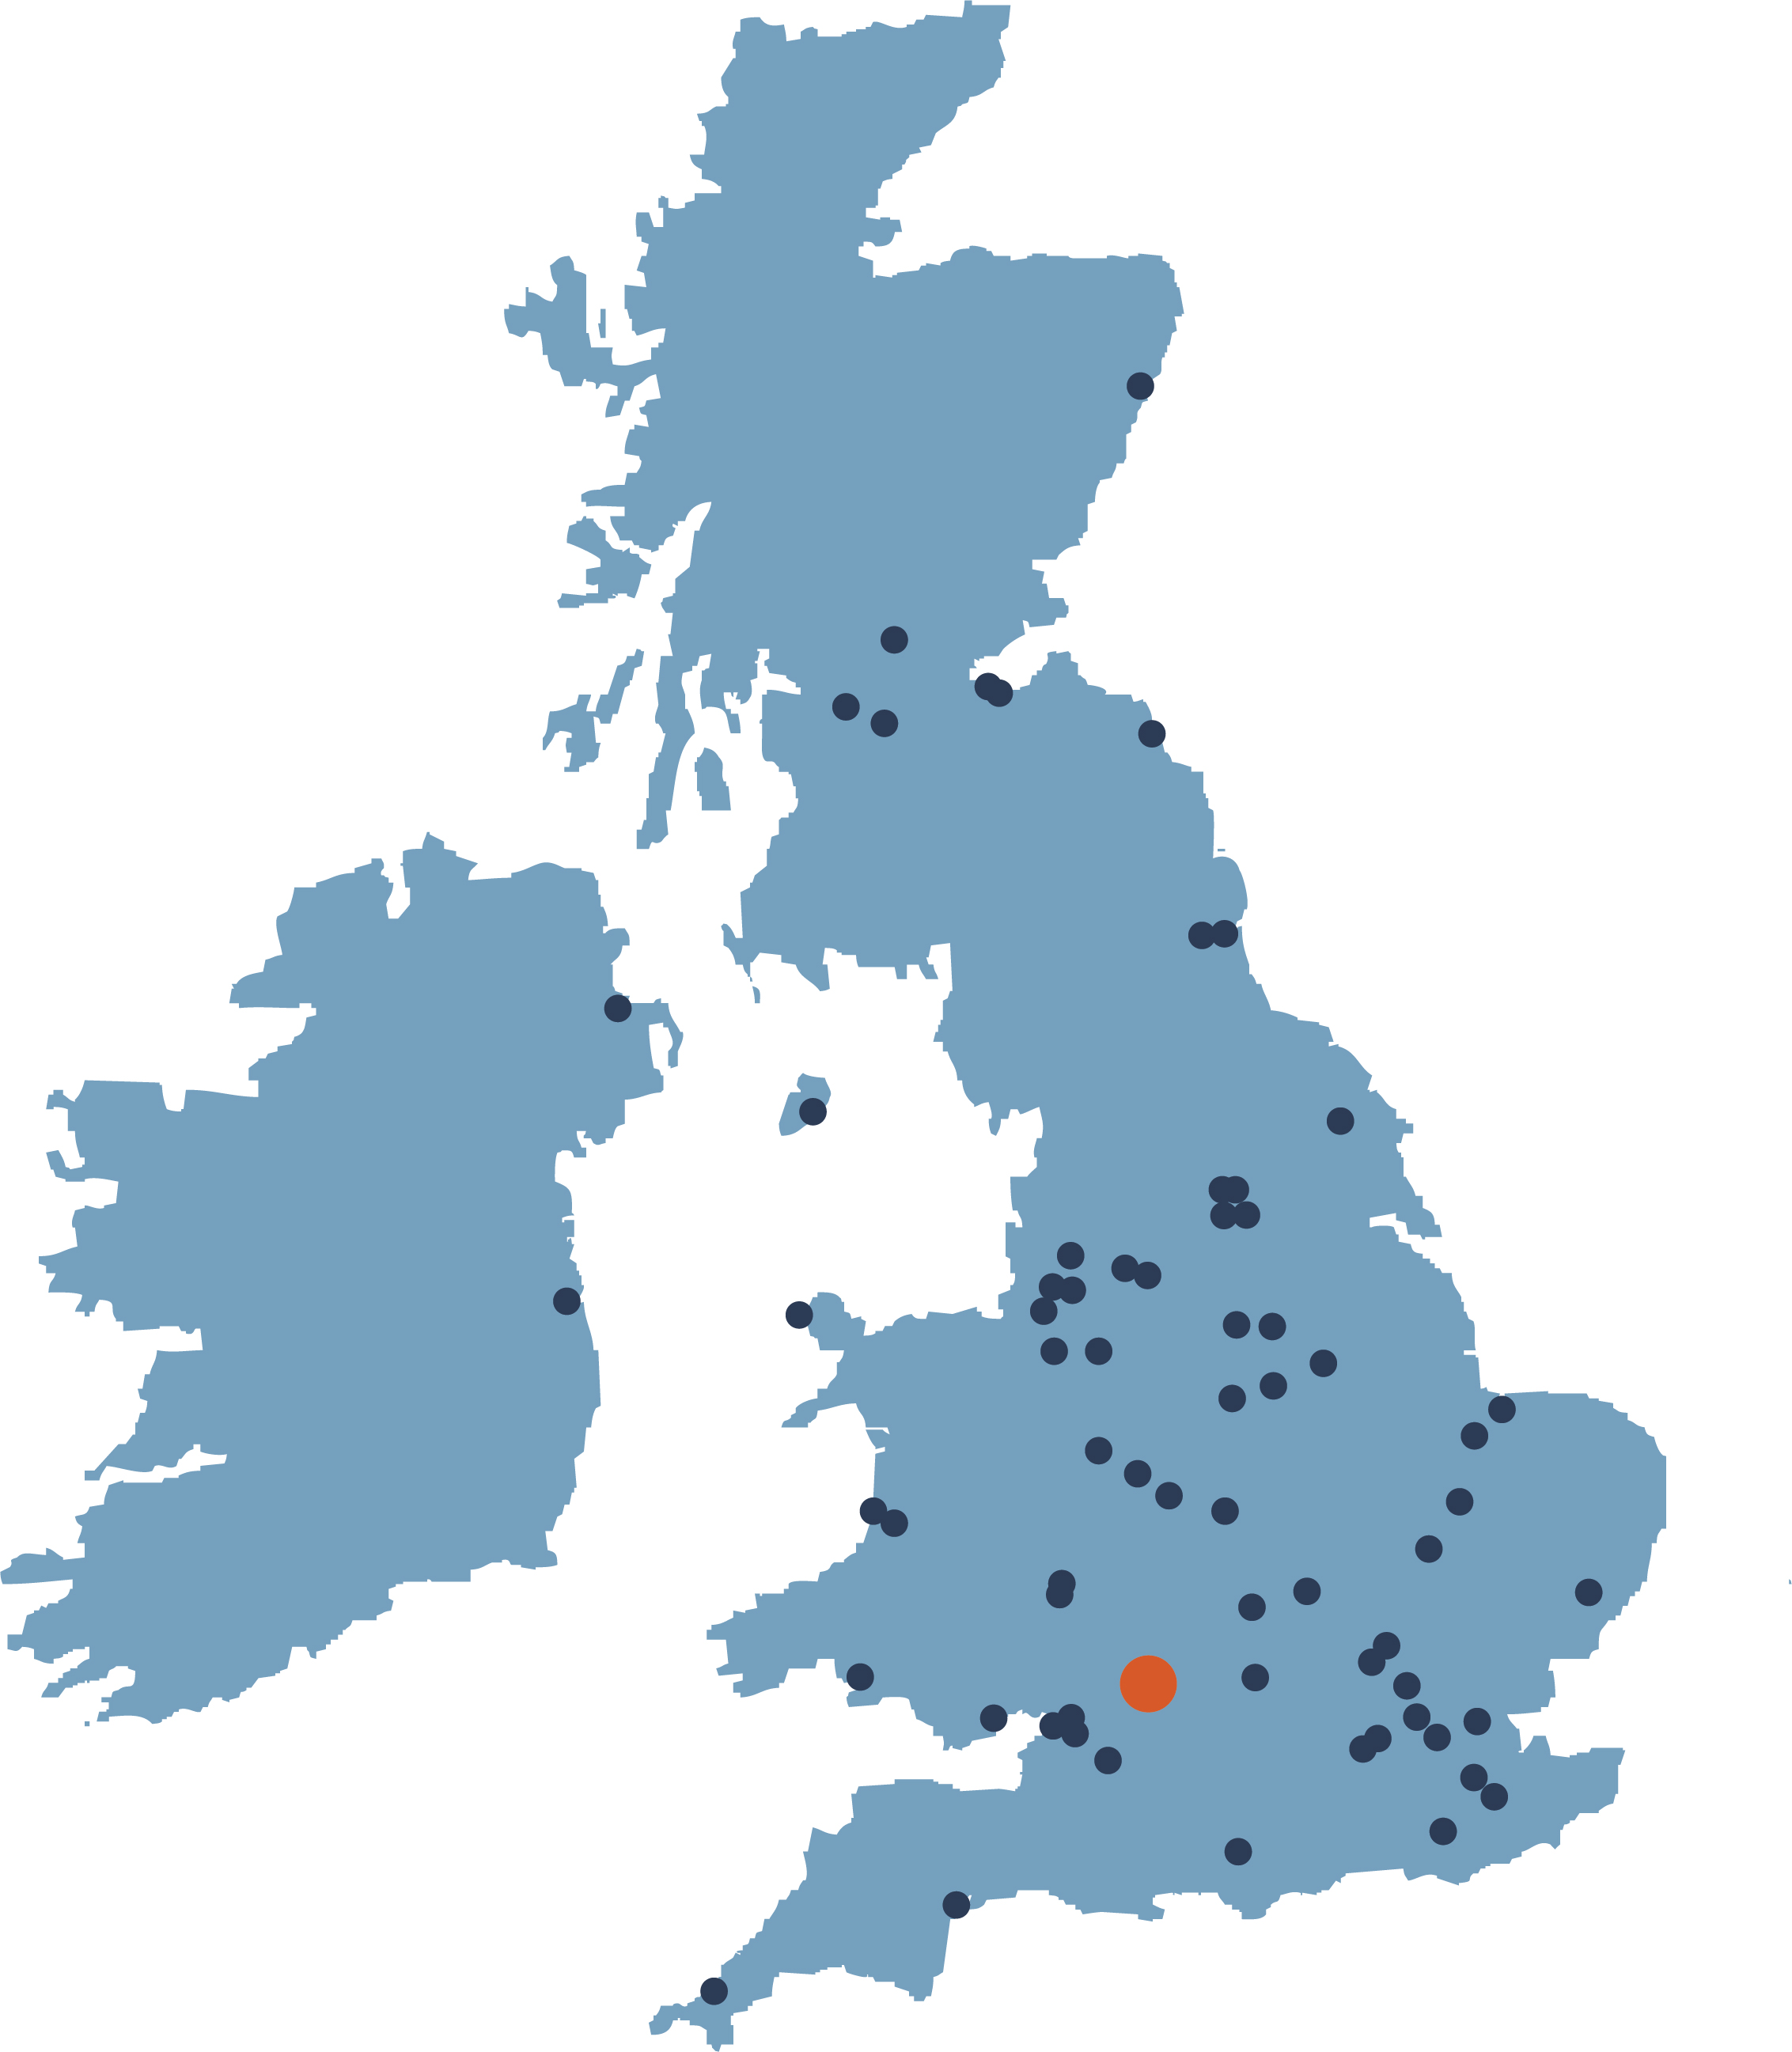 UK Location